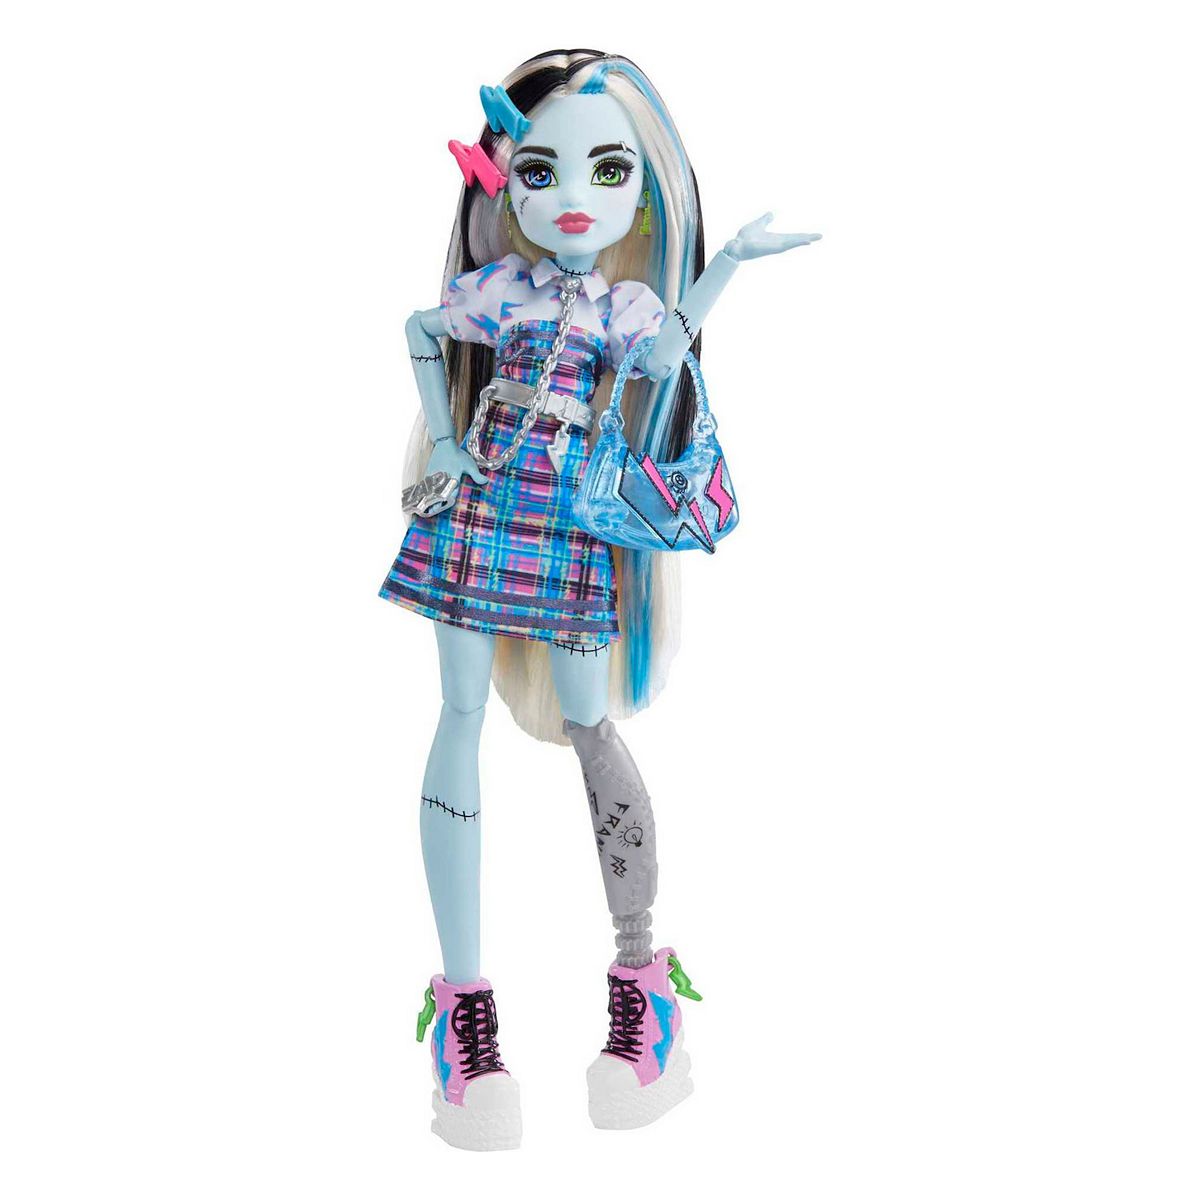 Mattel MTTHKY73 Monster High Frankie Stein Fashion Doll - Walmart.com